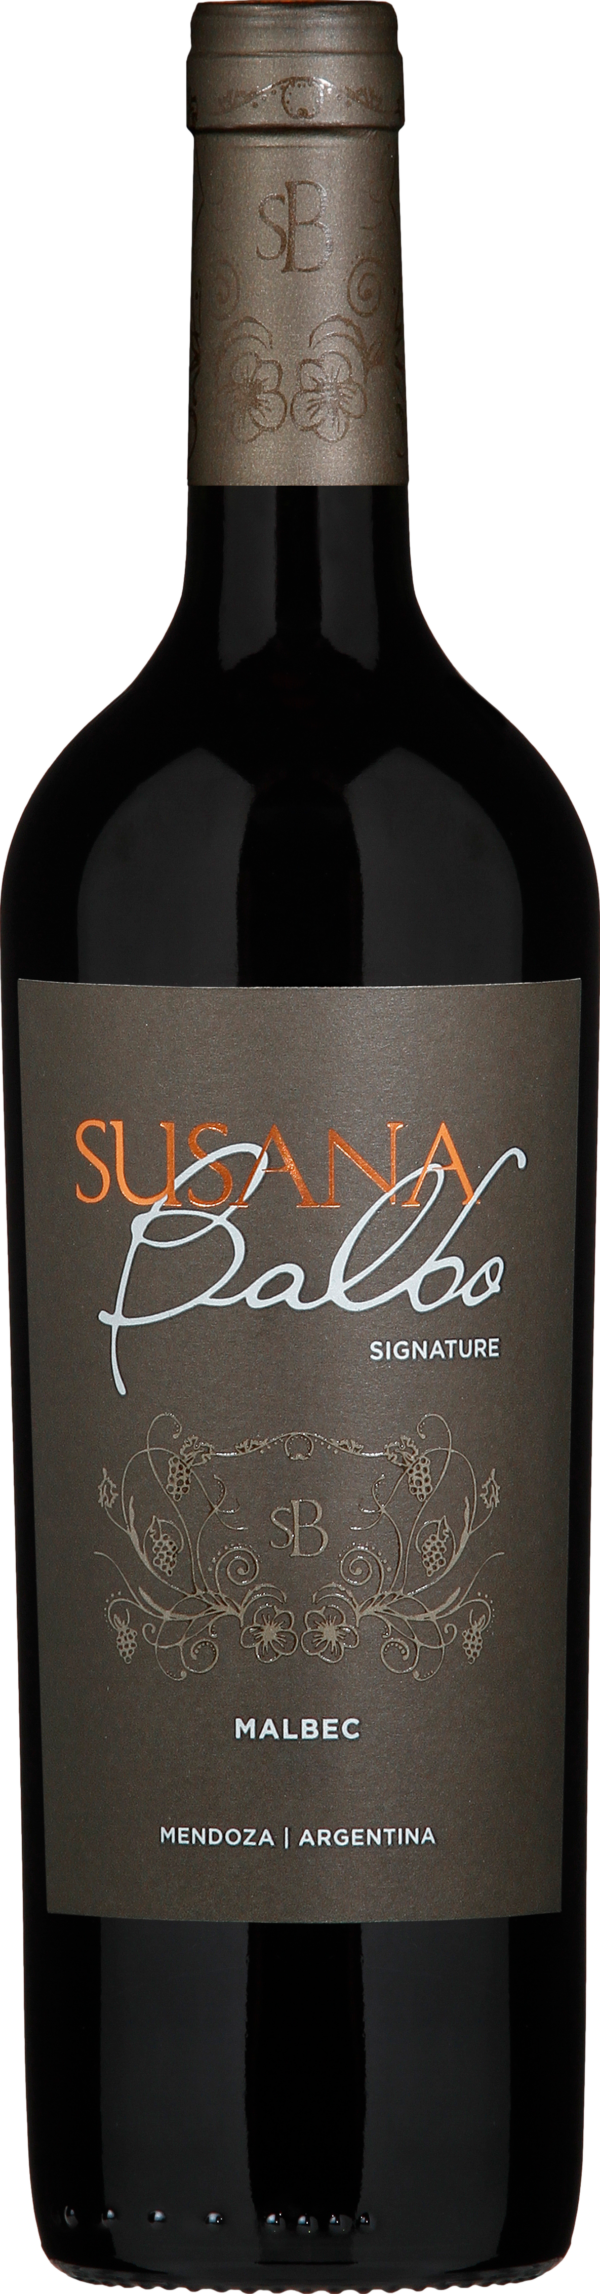 Product image of Susana Balbo Signature Malbec 2017 from 8wines